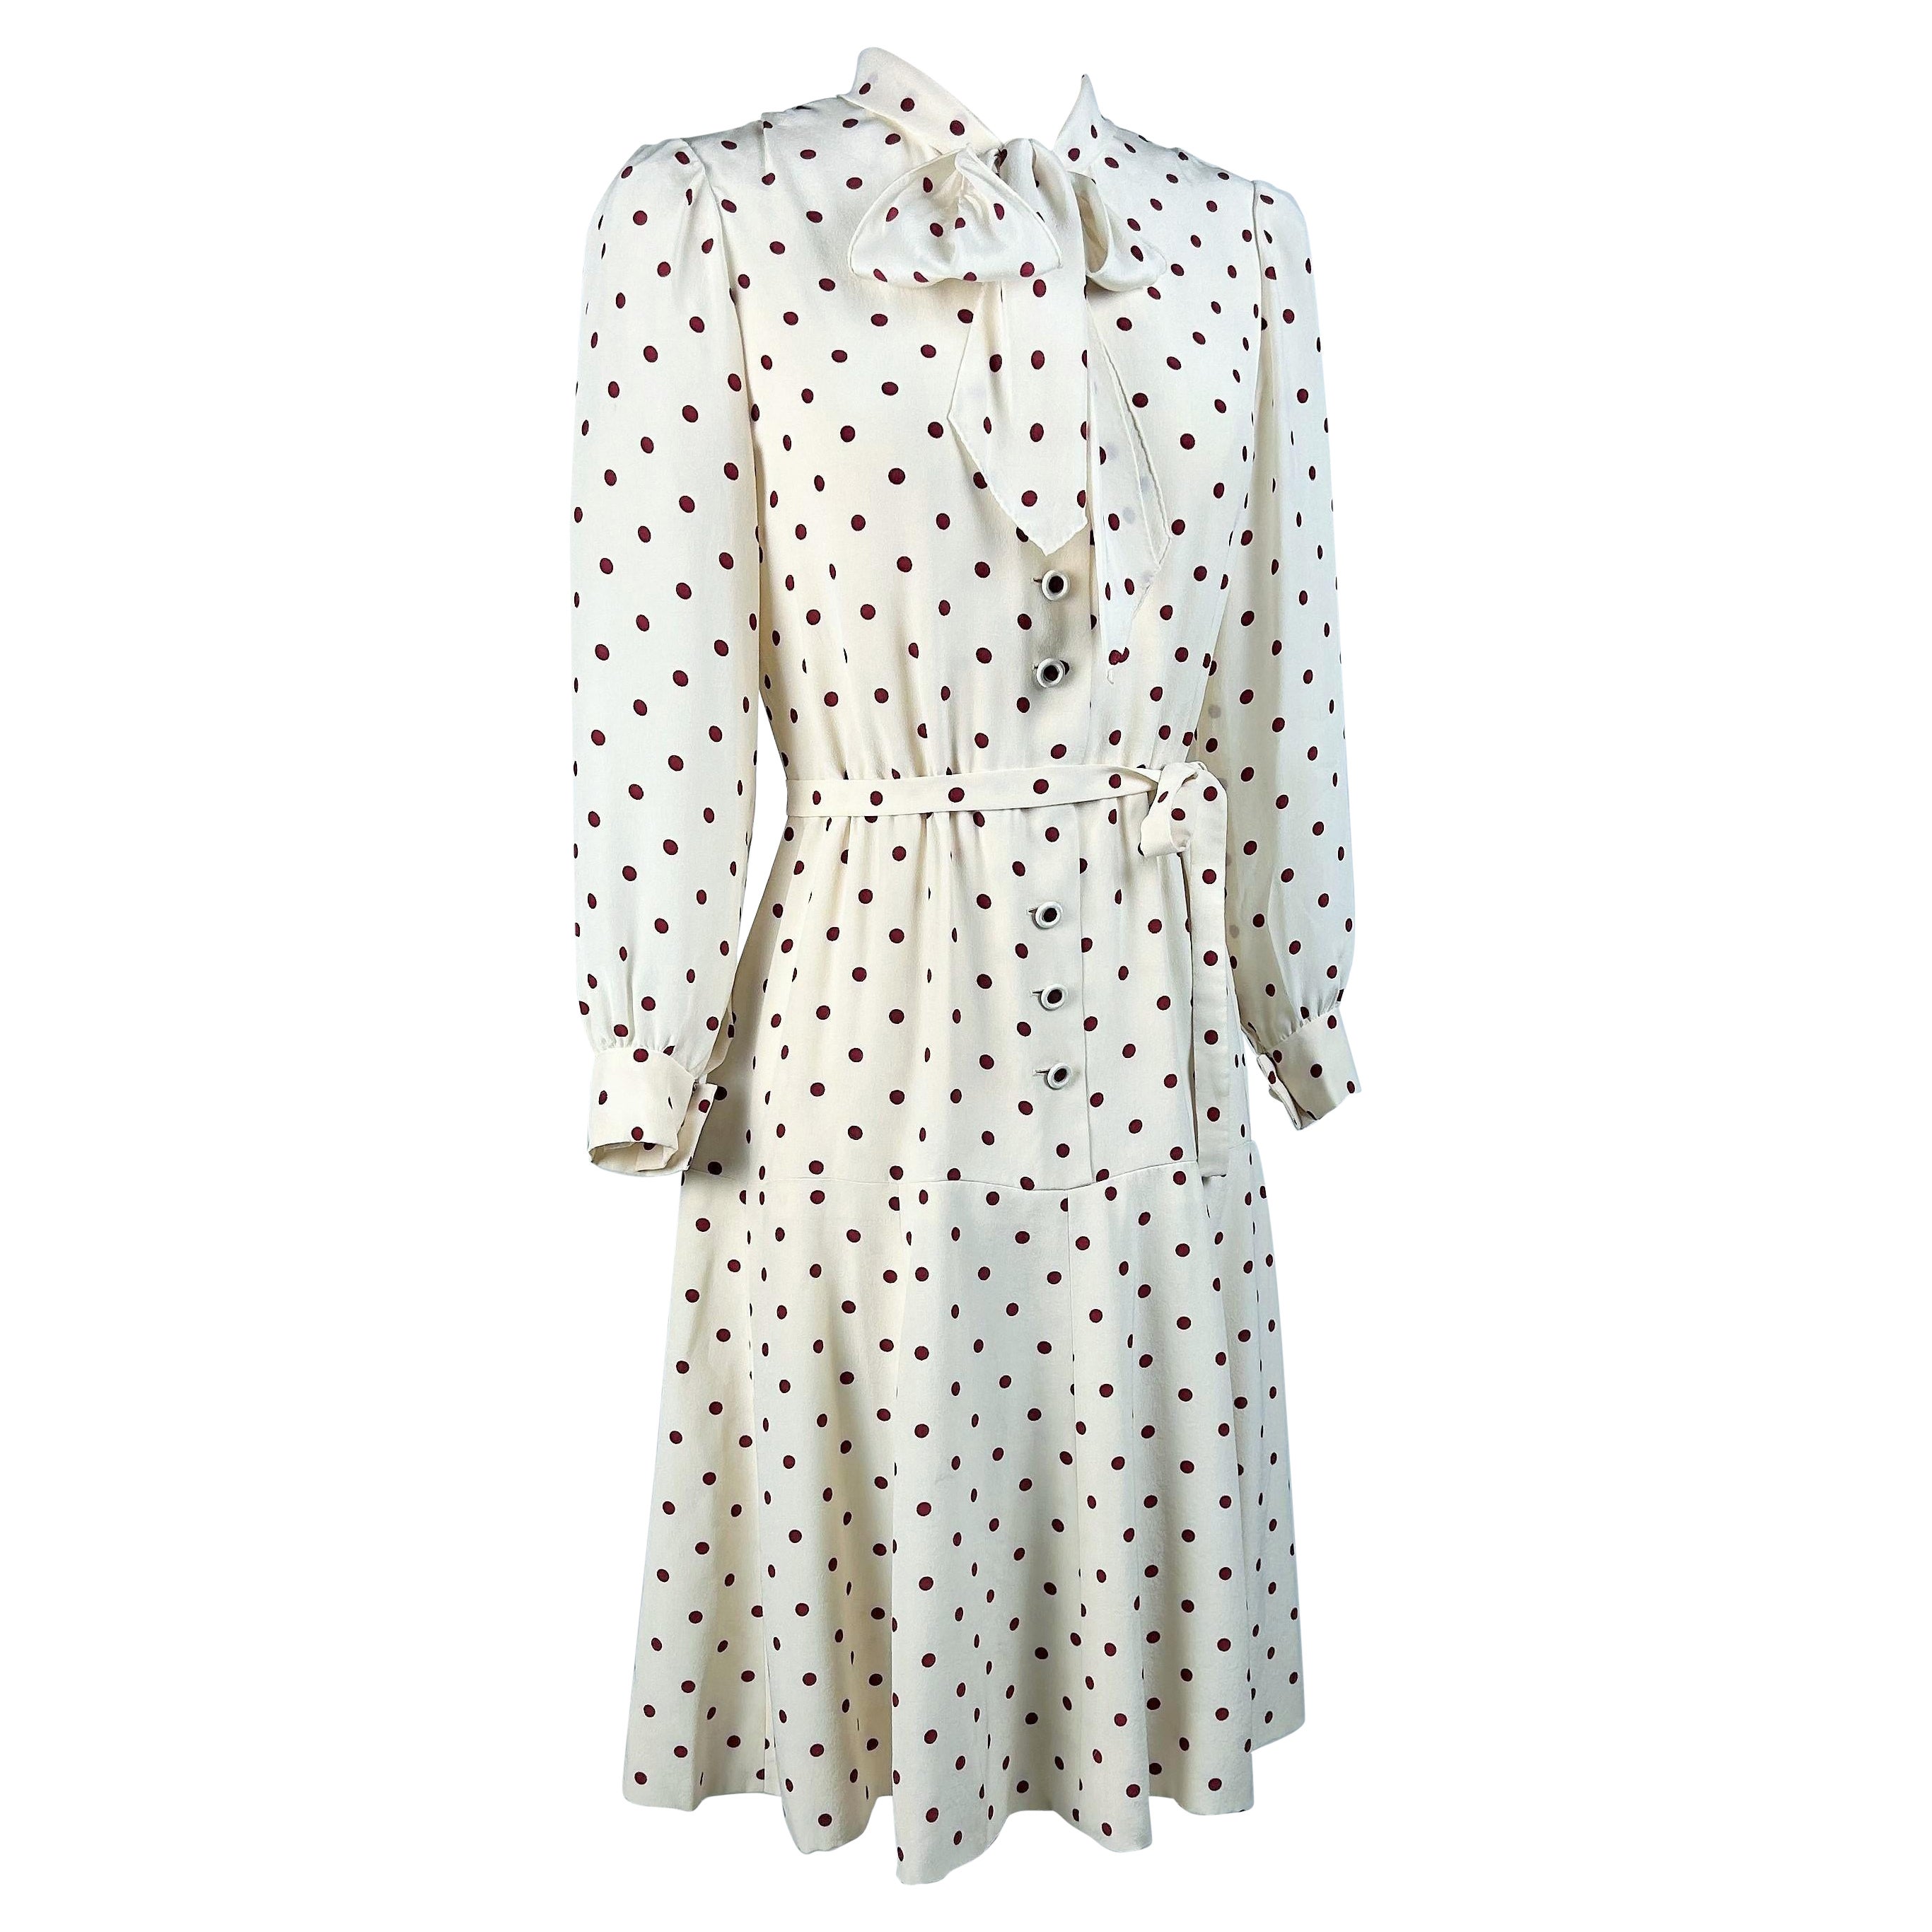 Chanel Polka Dot Dress - 6 For Sale on 1stDibs